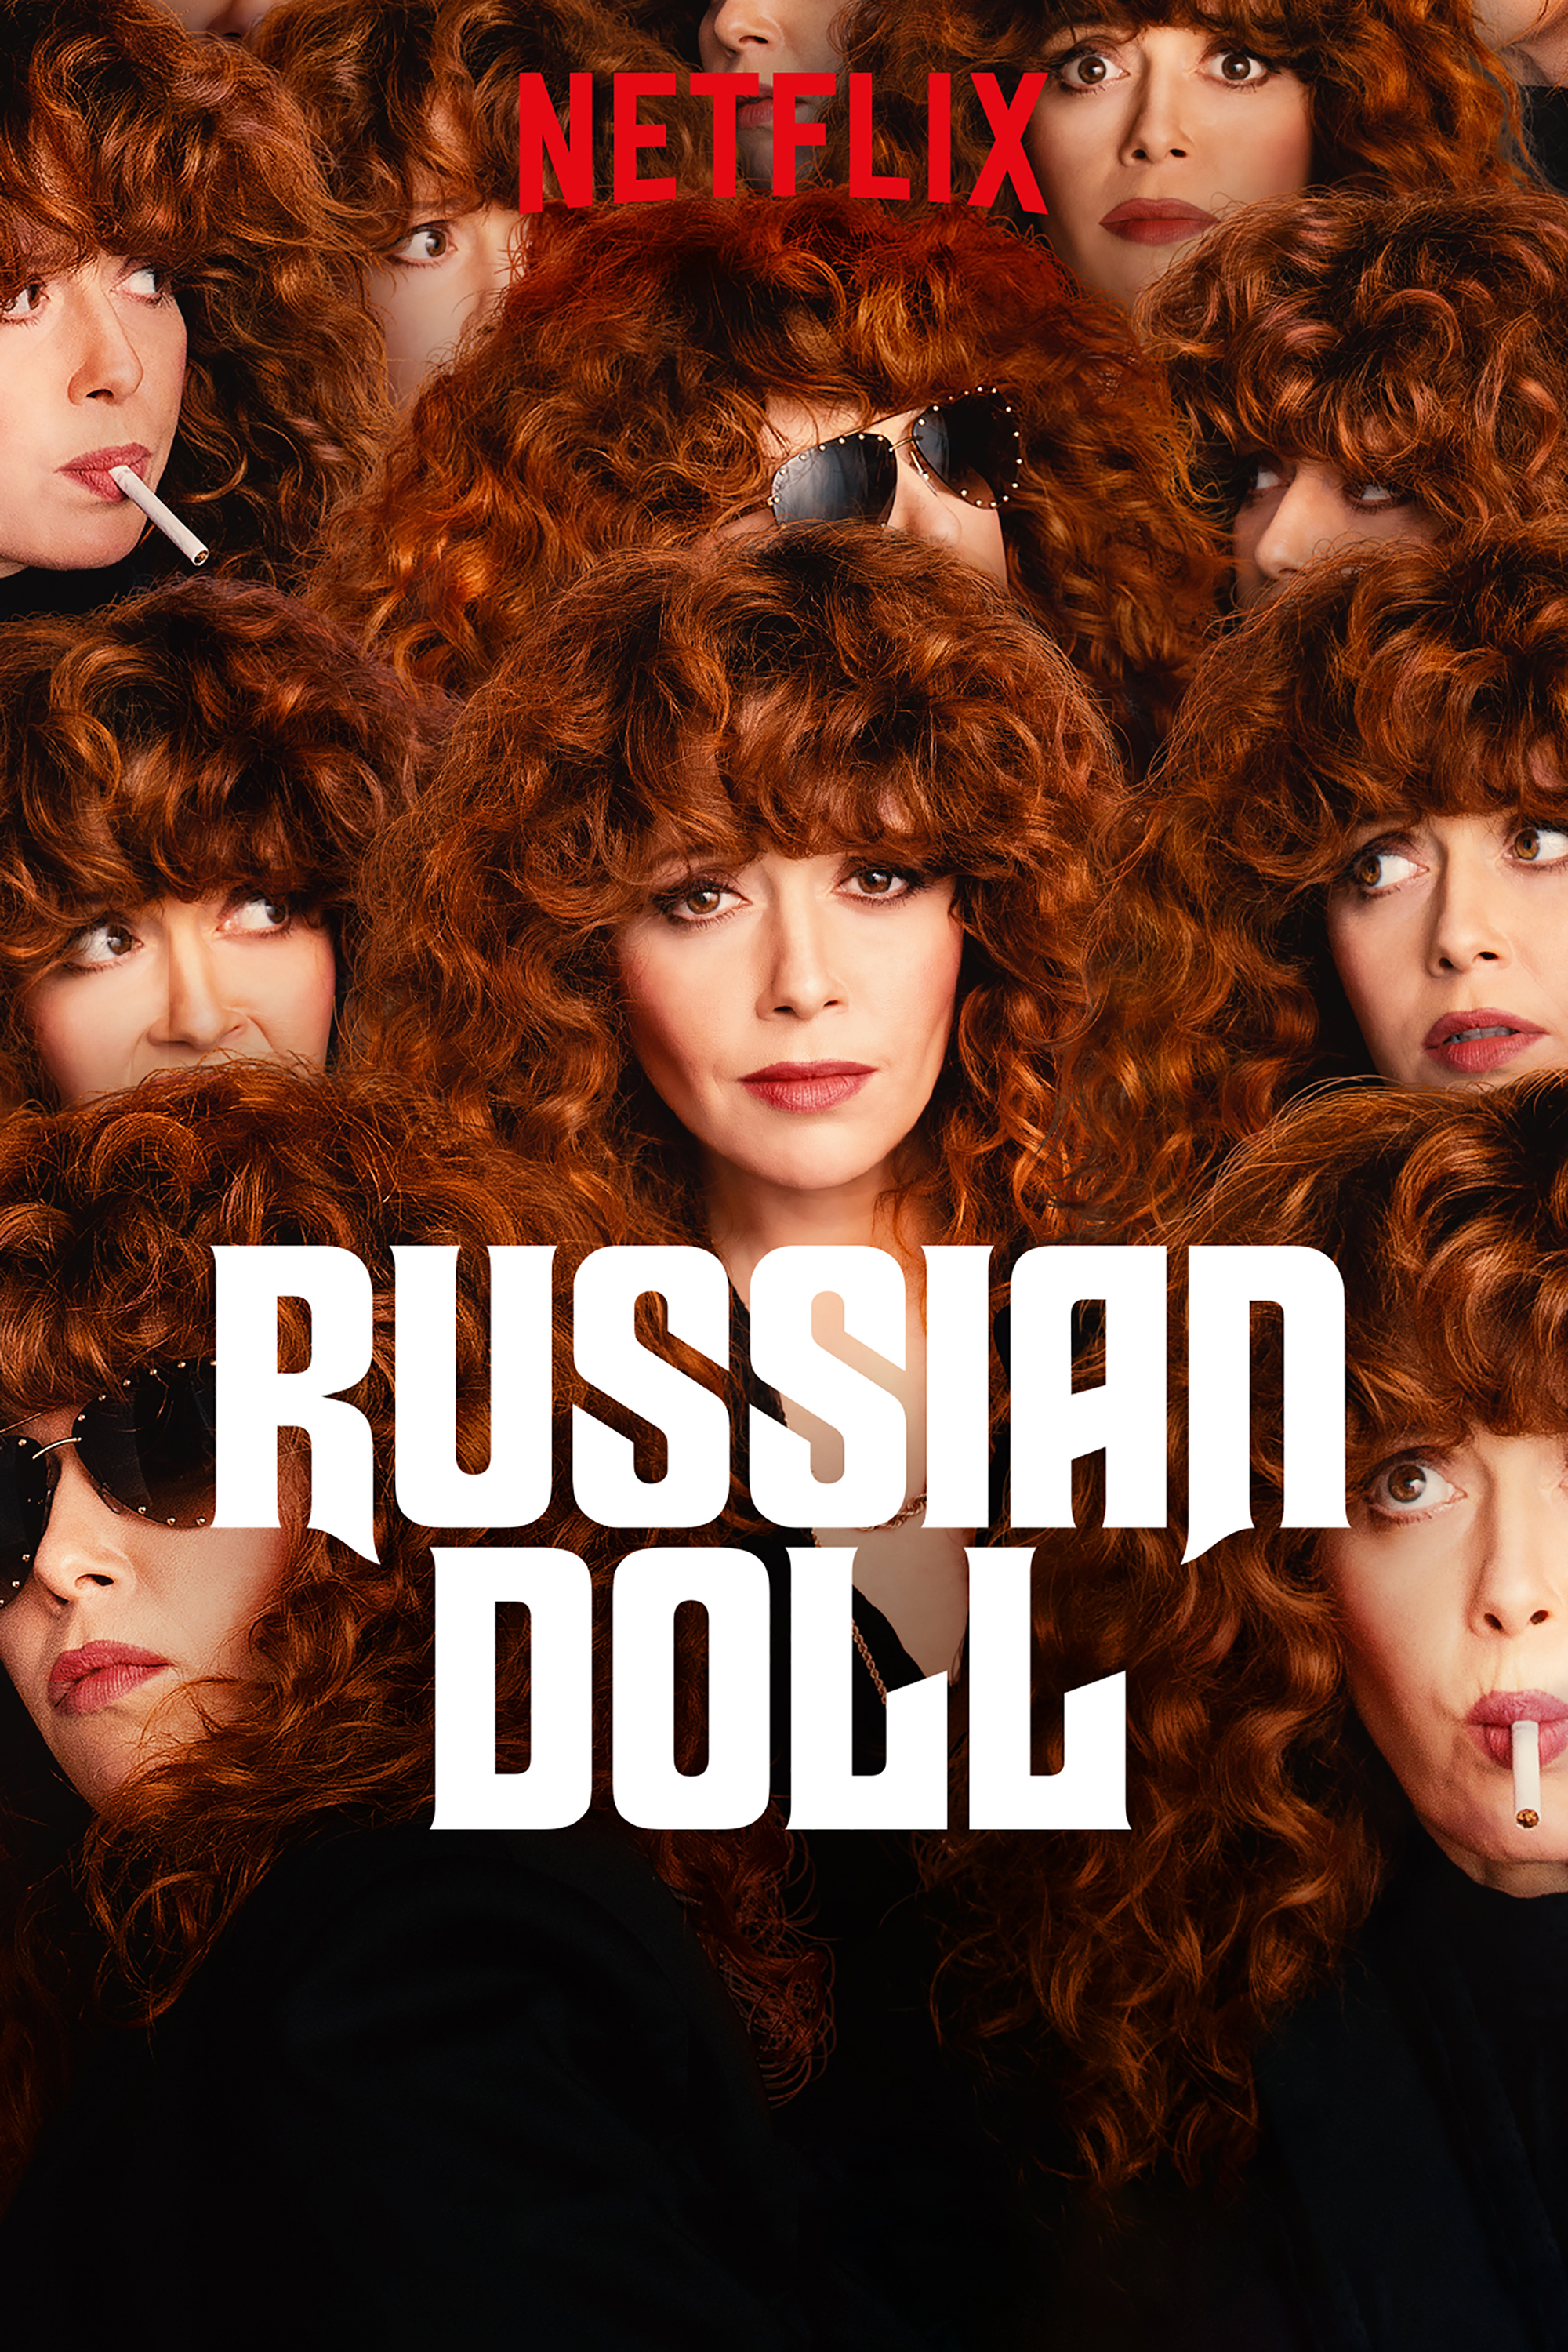 Russian Doll Season 2 (2022) รัชเชียน ดอลล์